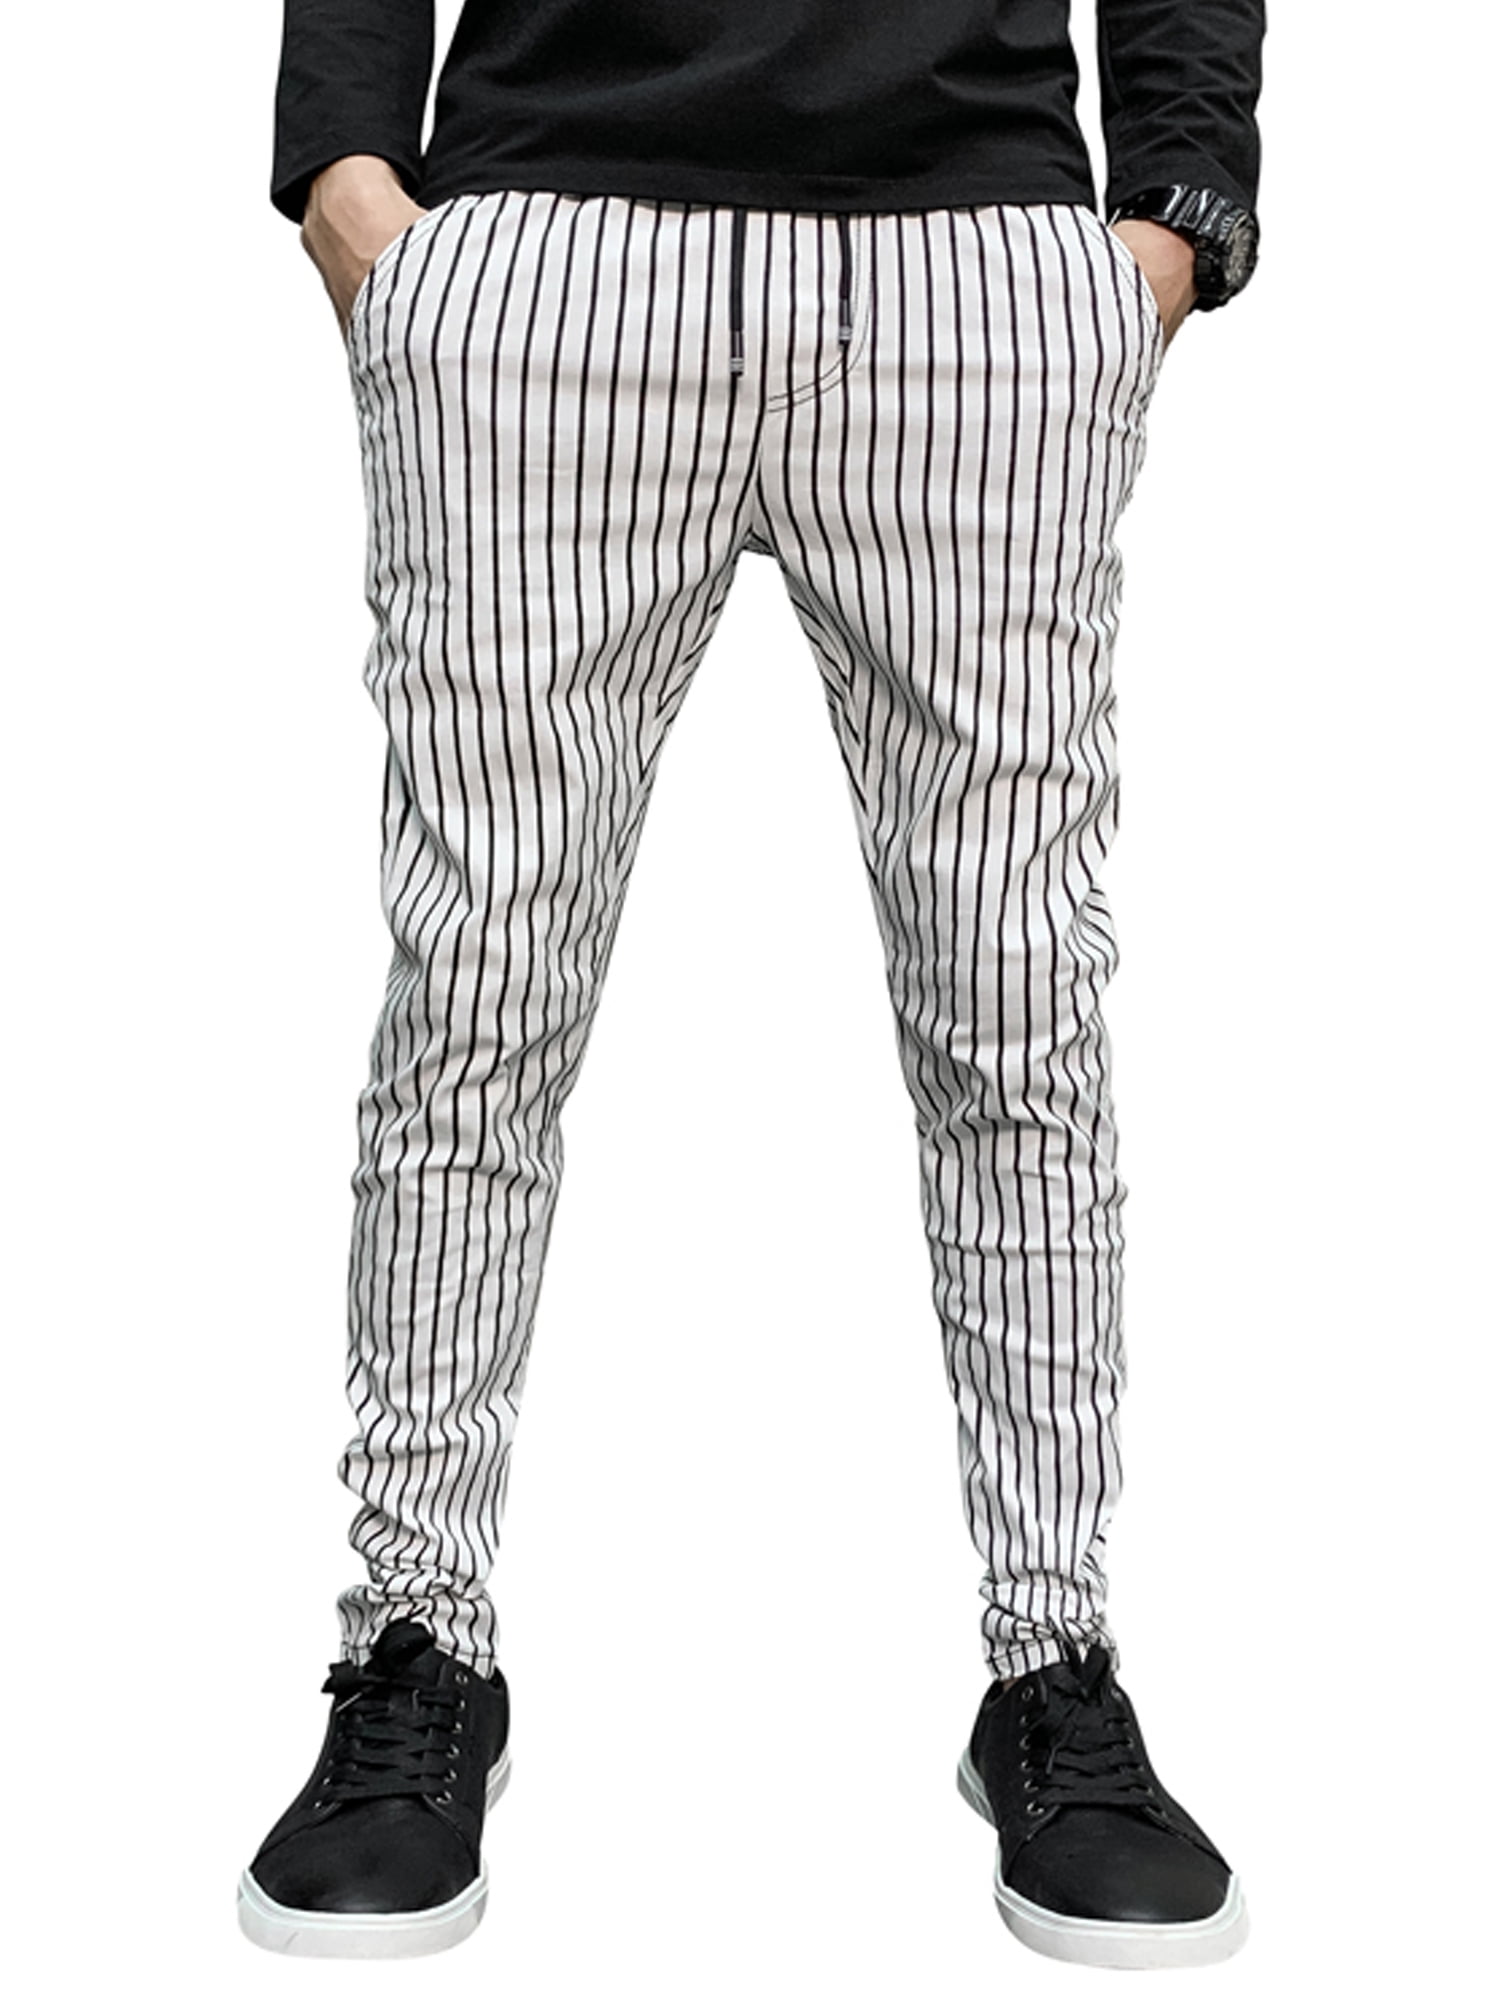 mens skinny striped pants